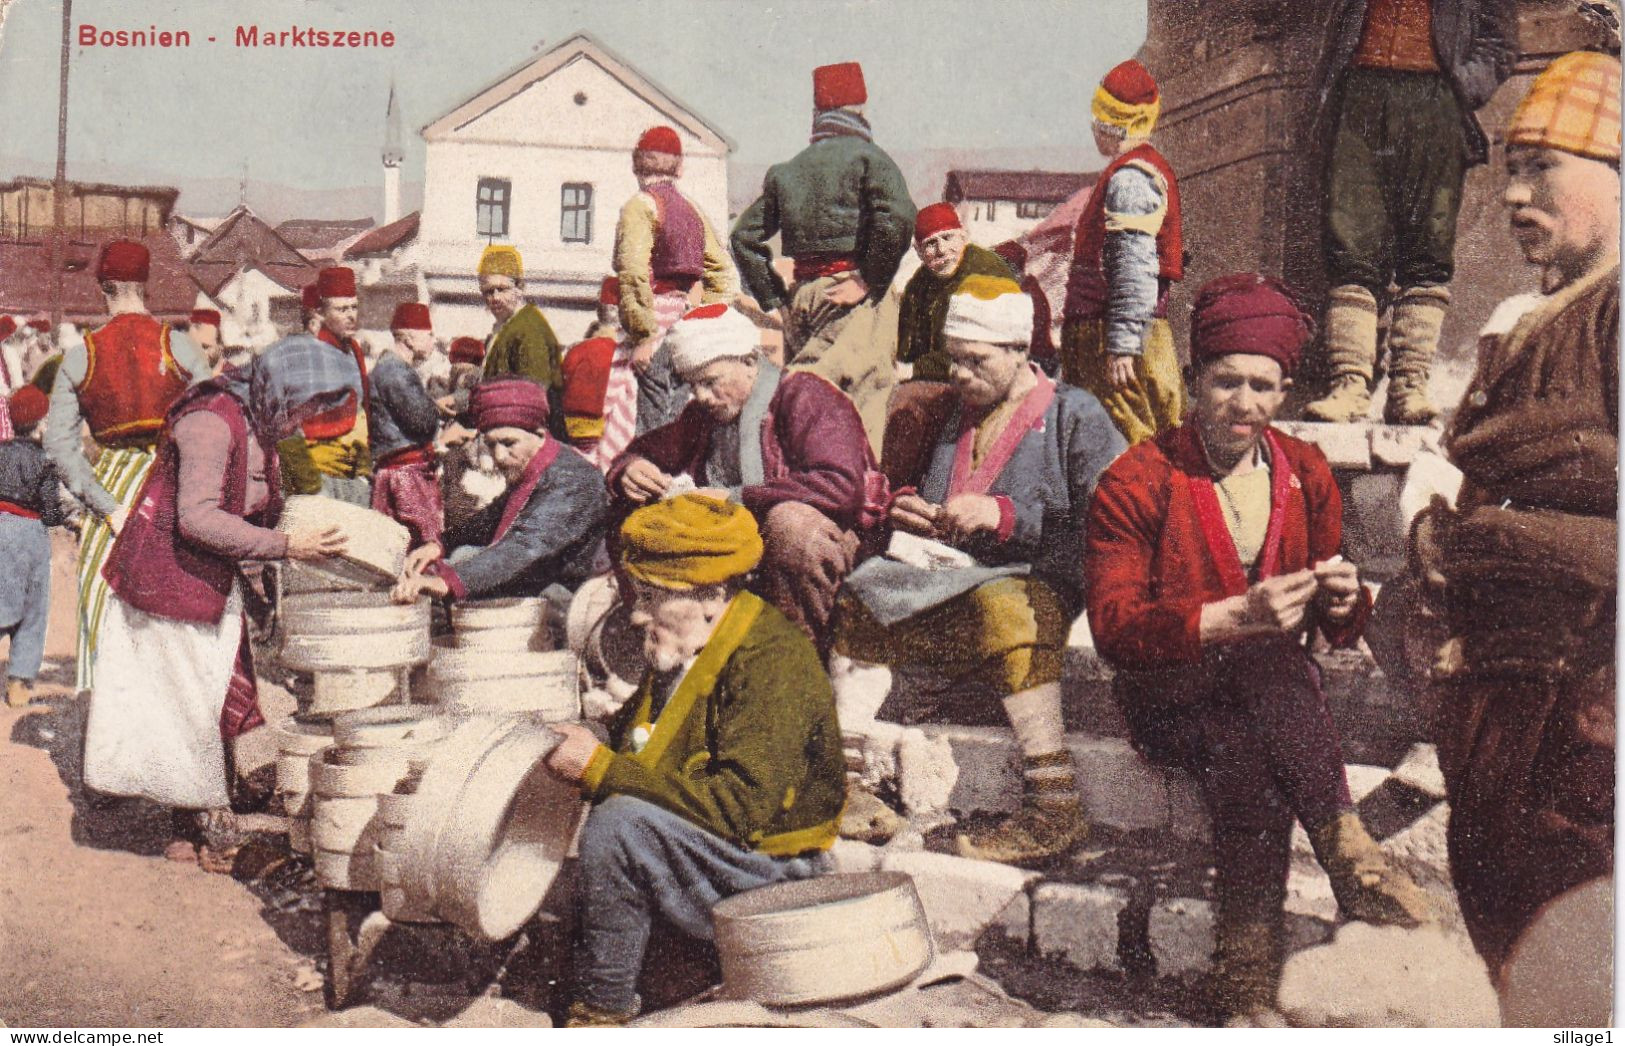 KuK - SARAJEVO BOSNIE - Bosnien - Marktszene  Carte Postale Ancienne Colorisée  - Marché Vieux Métiers WW1 - Bosnia And Herzegovina